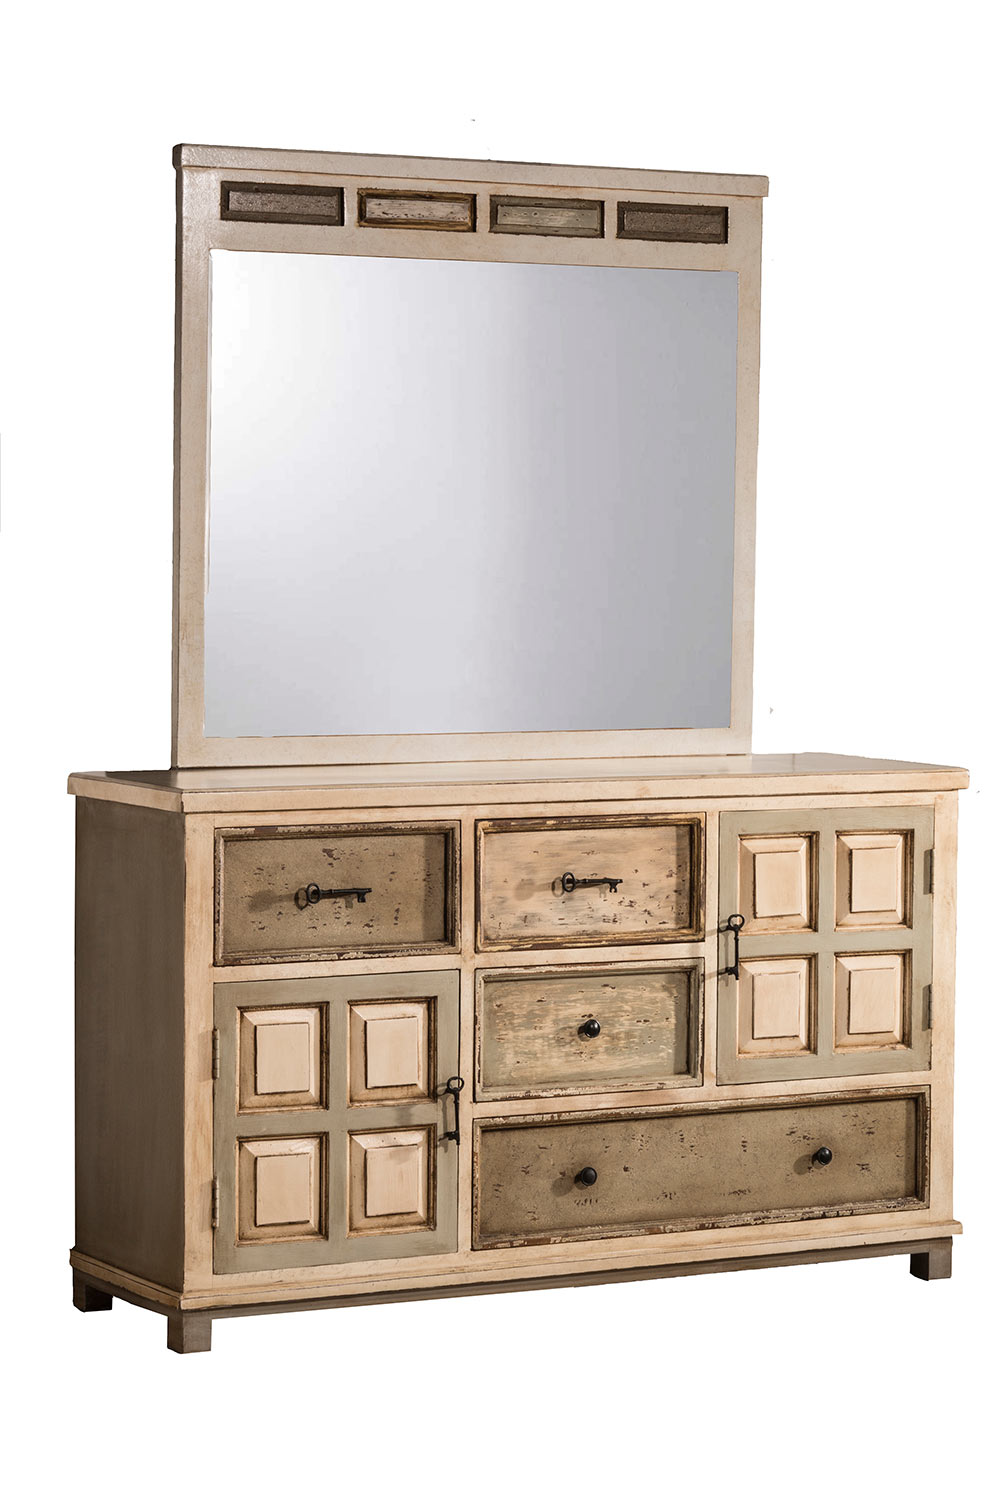 Hillsdale LaRose Dresser with Mirror - Rustic White/Gray